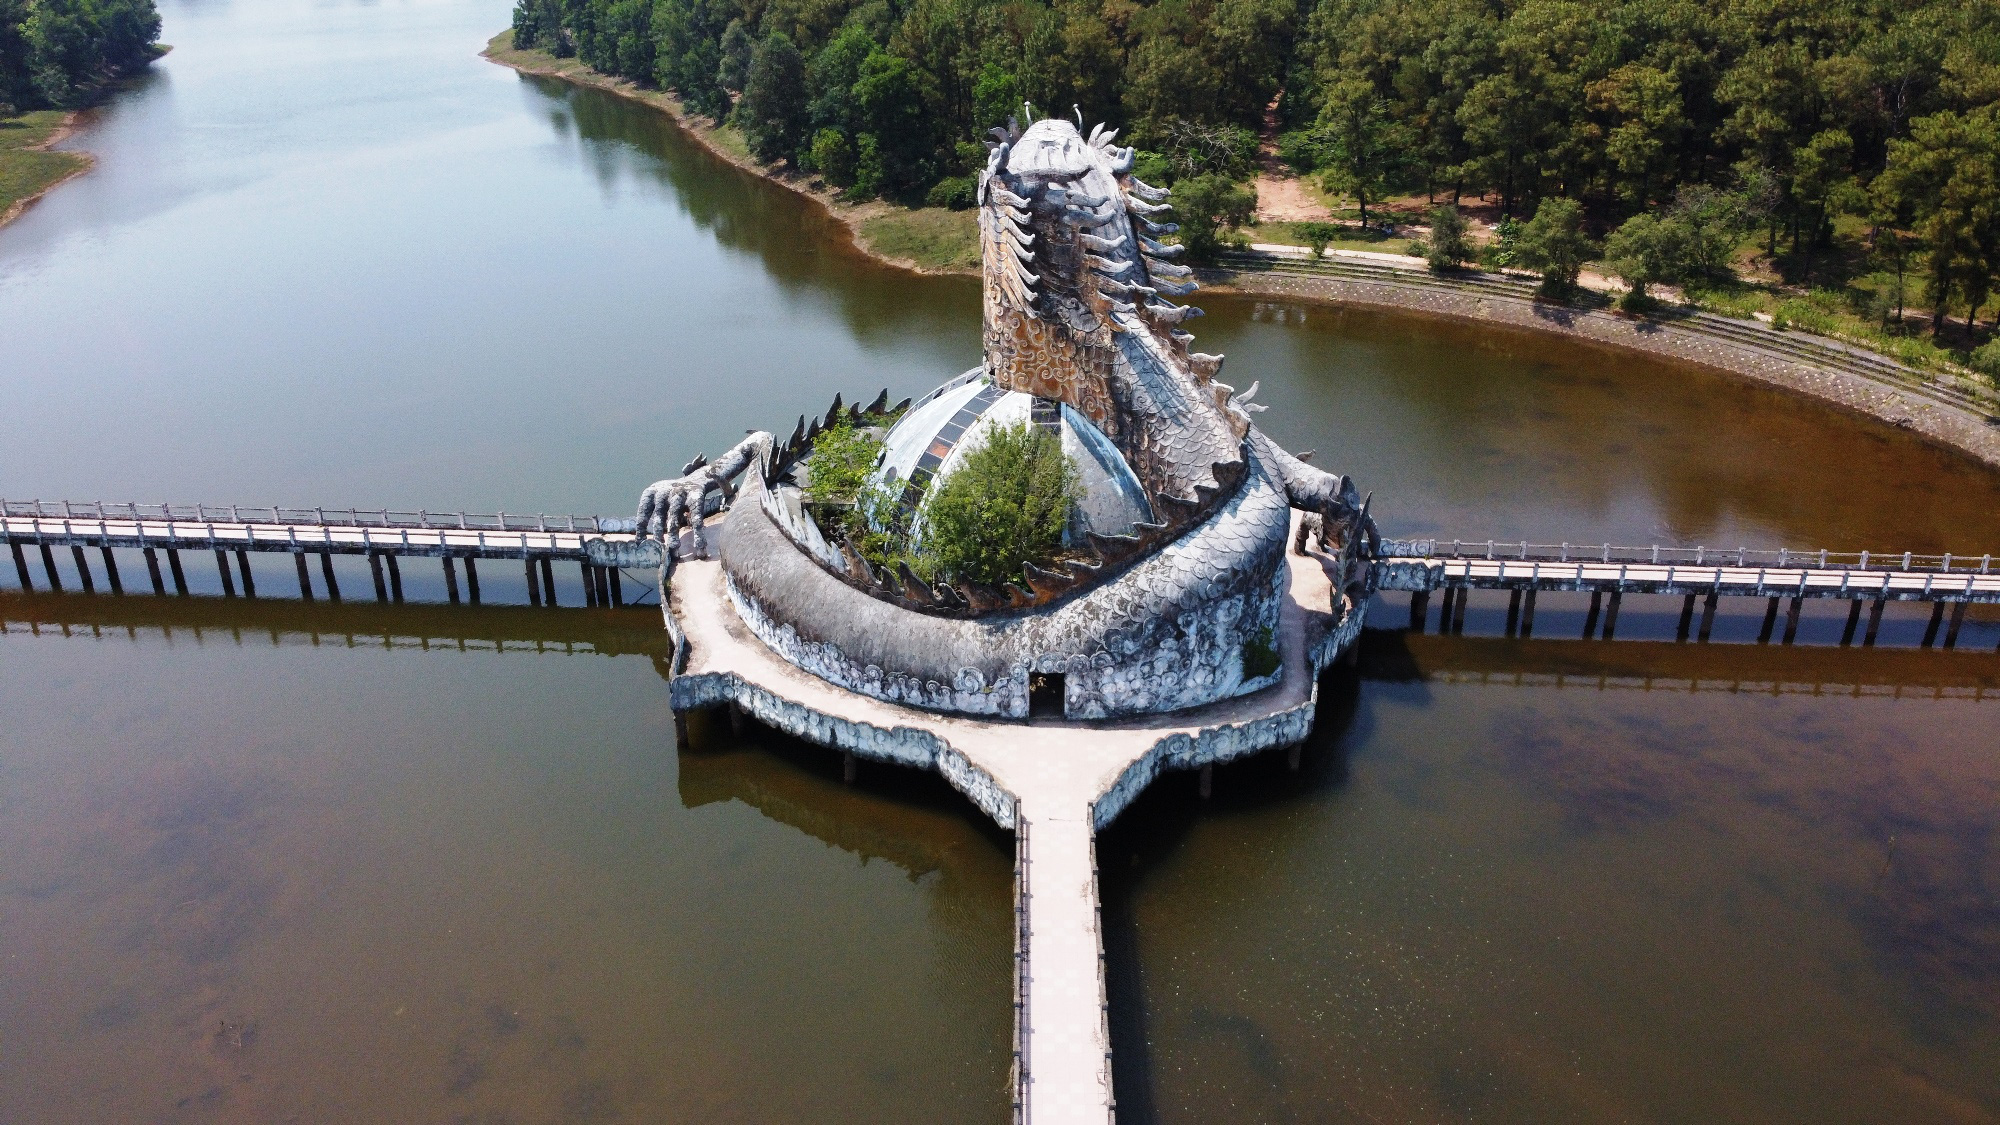 Province seeks investors to revive ‘eerie’ abandoned water park in central Vietnam